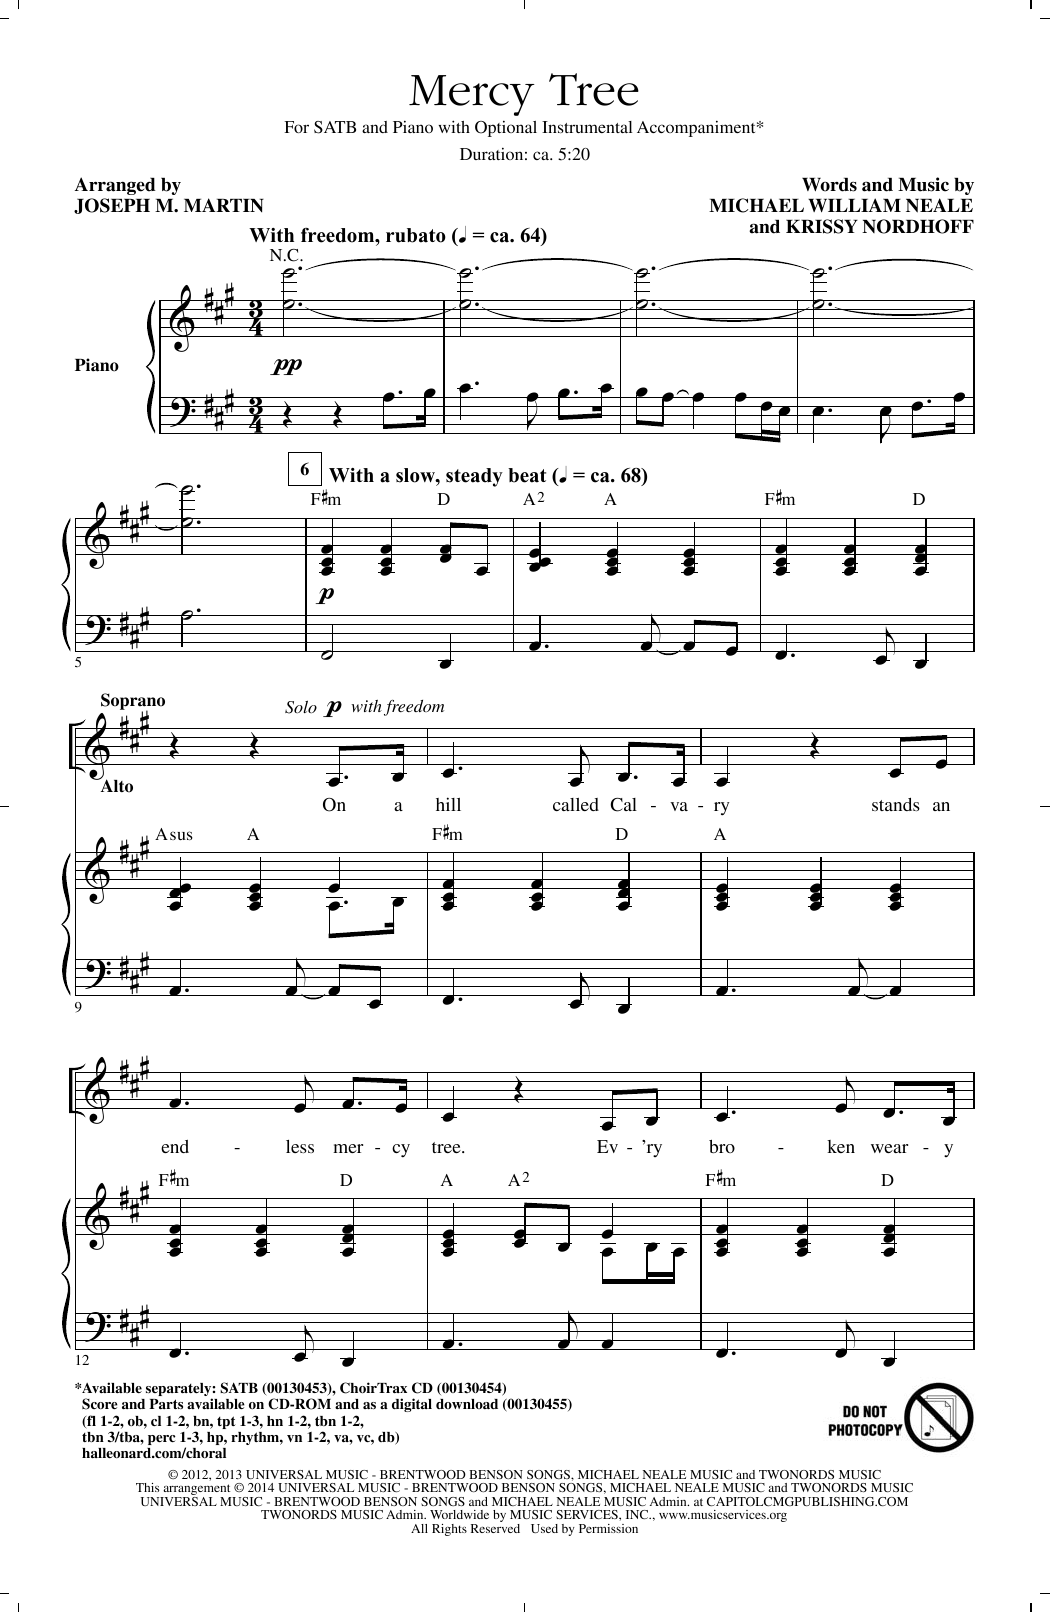 Joseph M. Martin Mercy Tree Sheet Music Notes & Chords for SATB Choir - Download or Print PDF